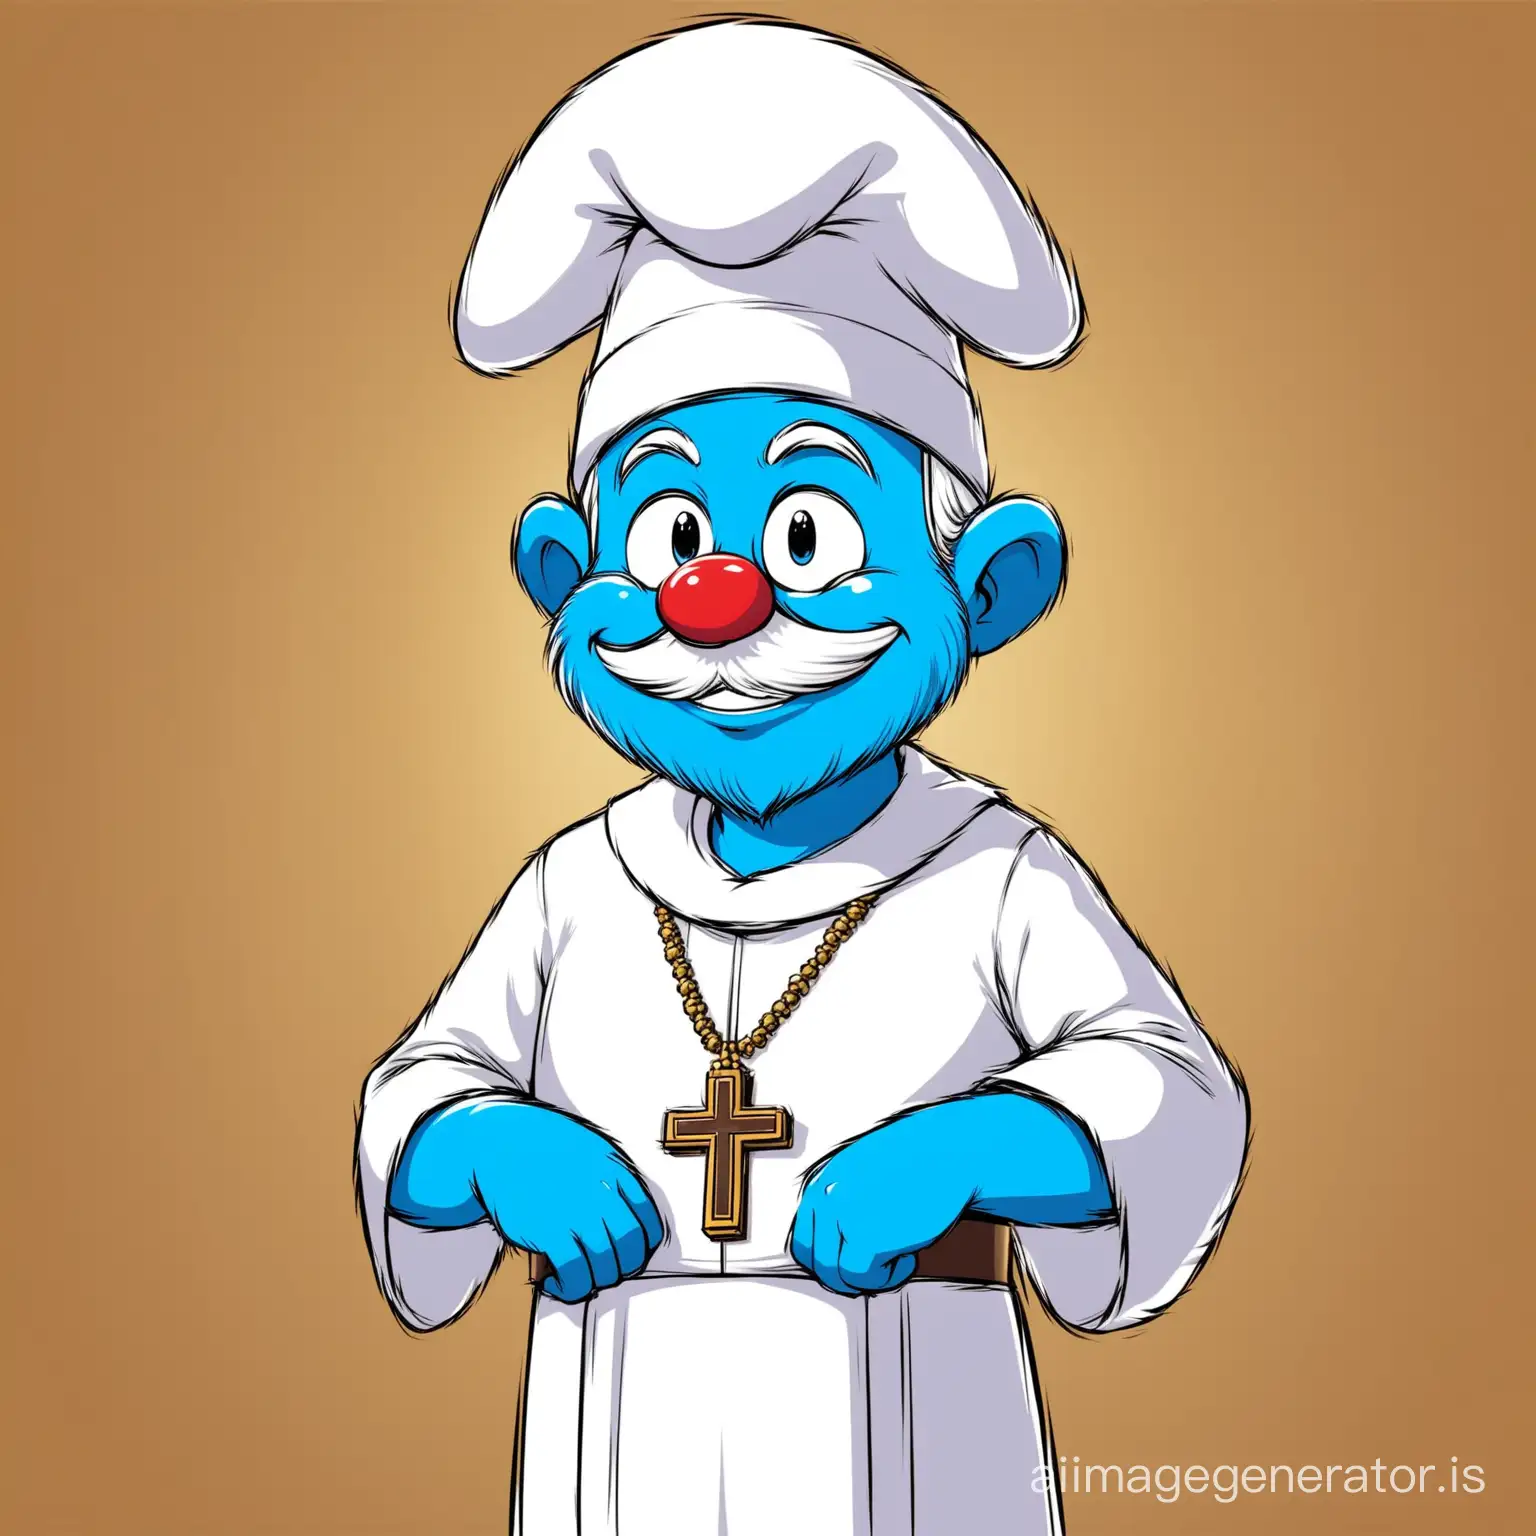 Papa Smurf dressed like a priest